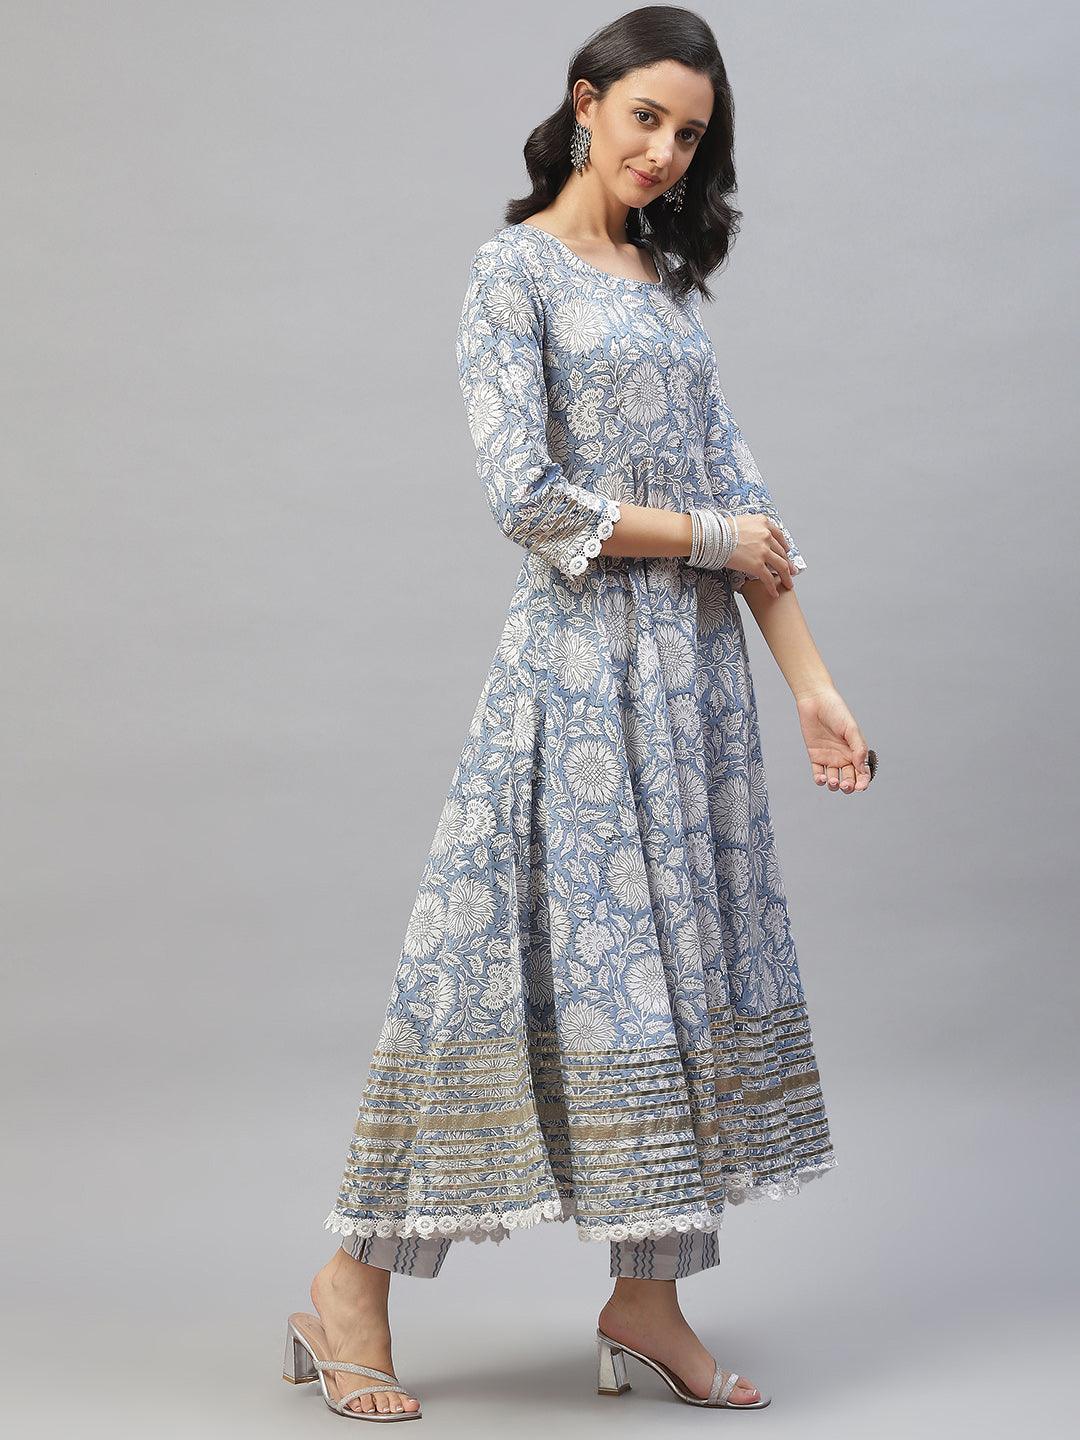 Divena Sky blue Hand Block Printed Anarkali kurta Pant Set with Dupatta - divena world